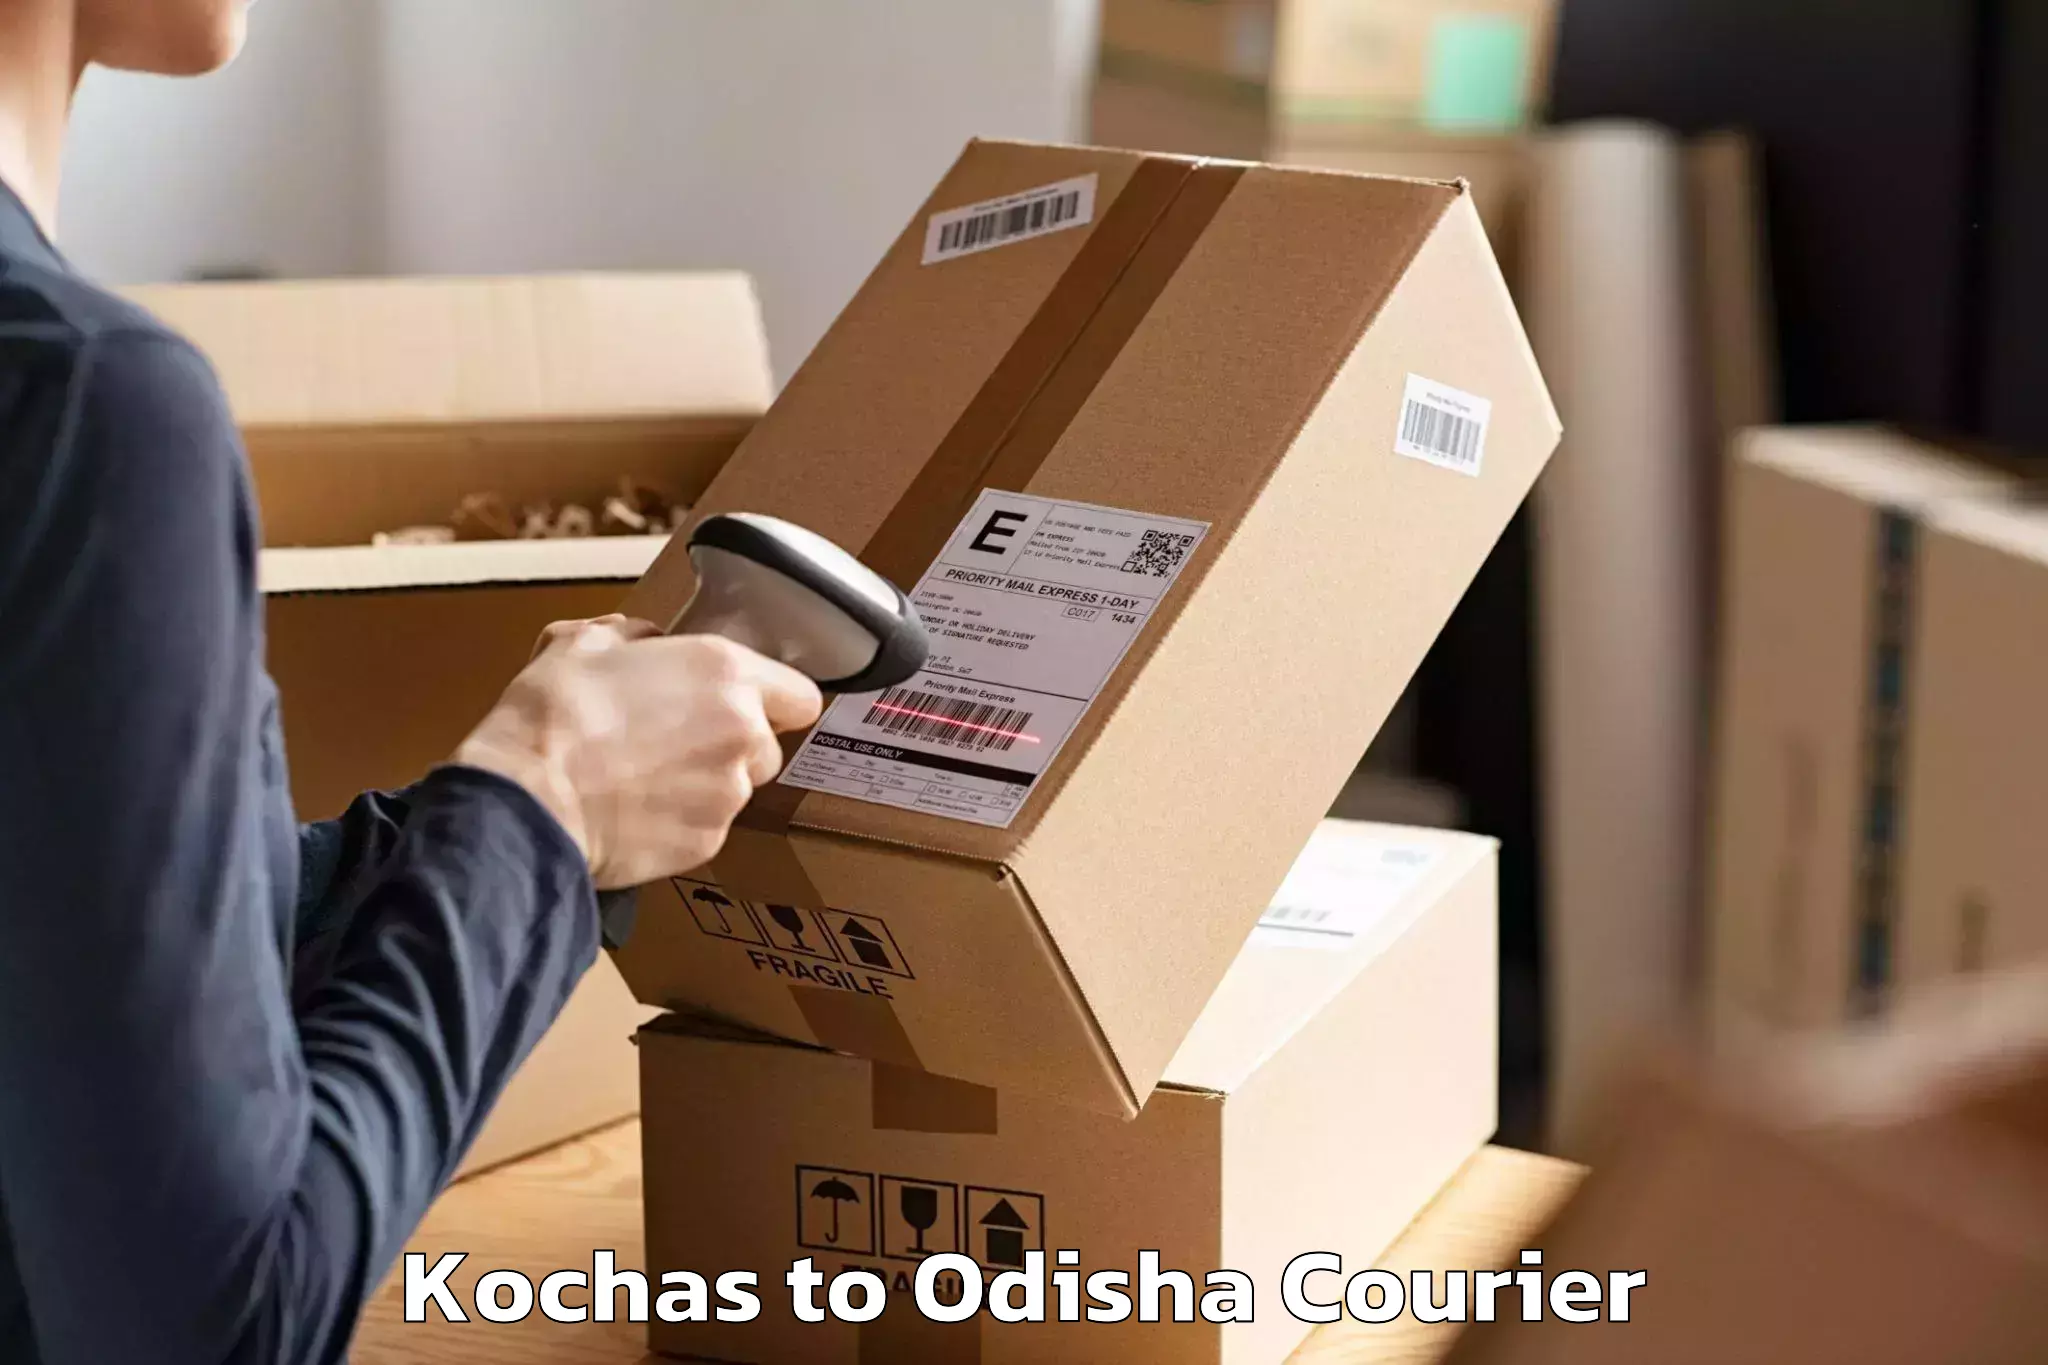 Furniture transport company Kochas to Ukhunda